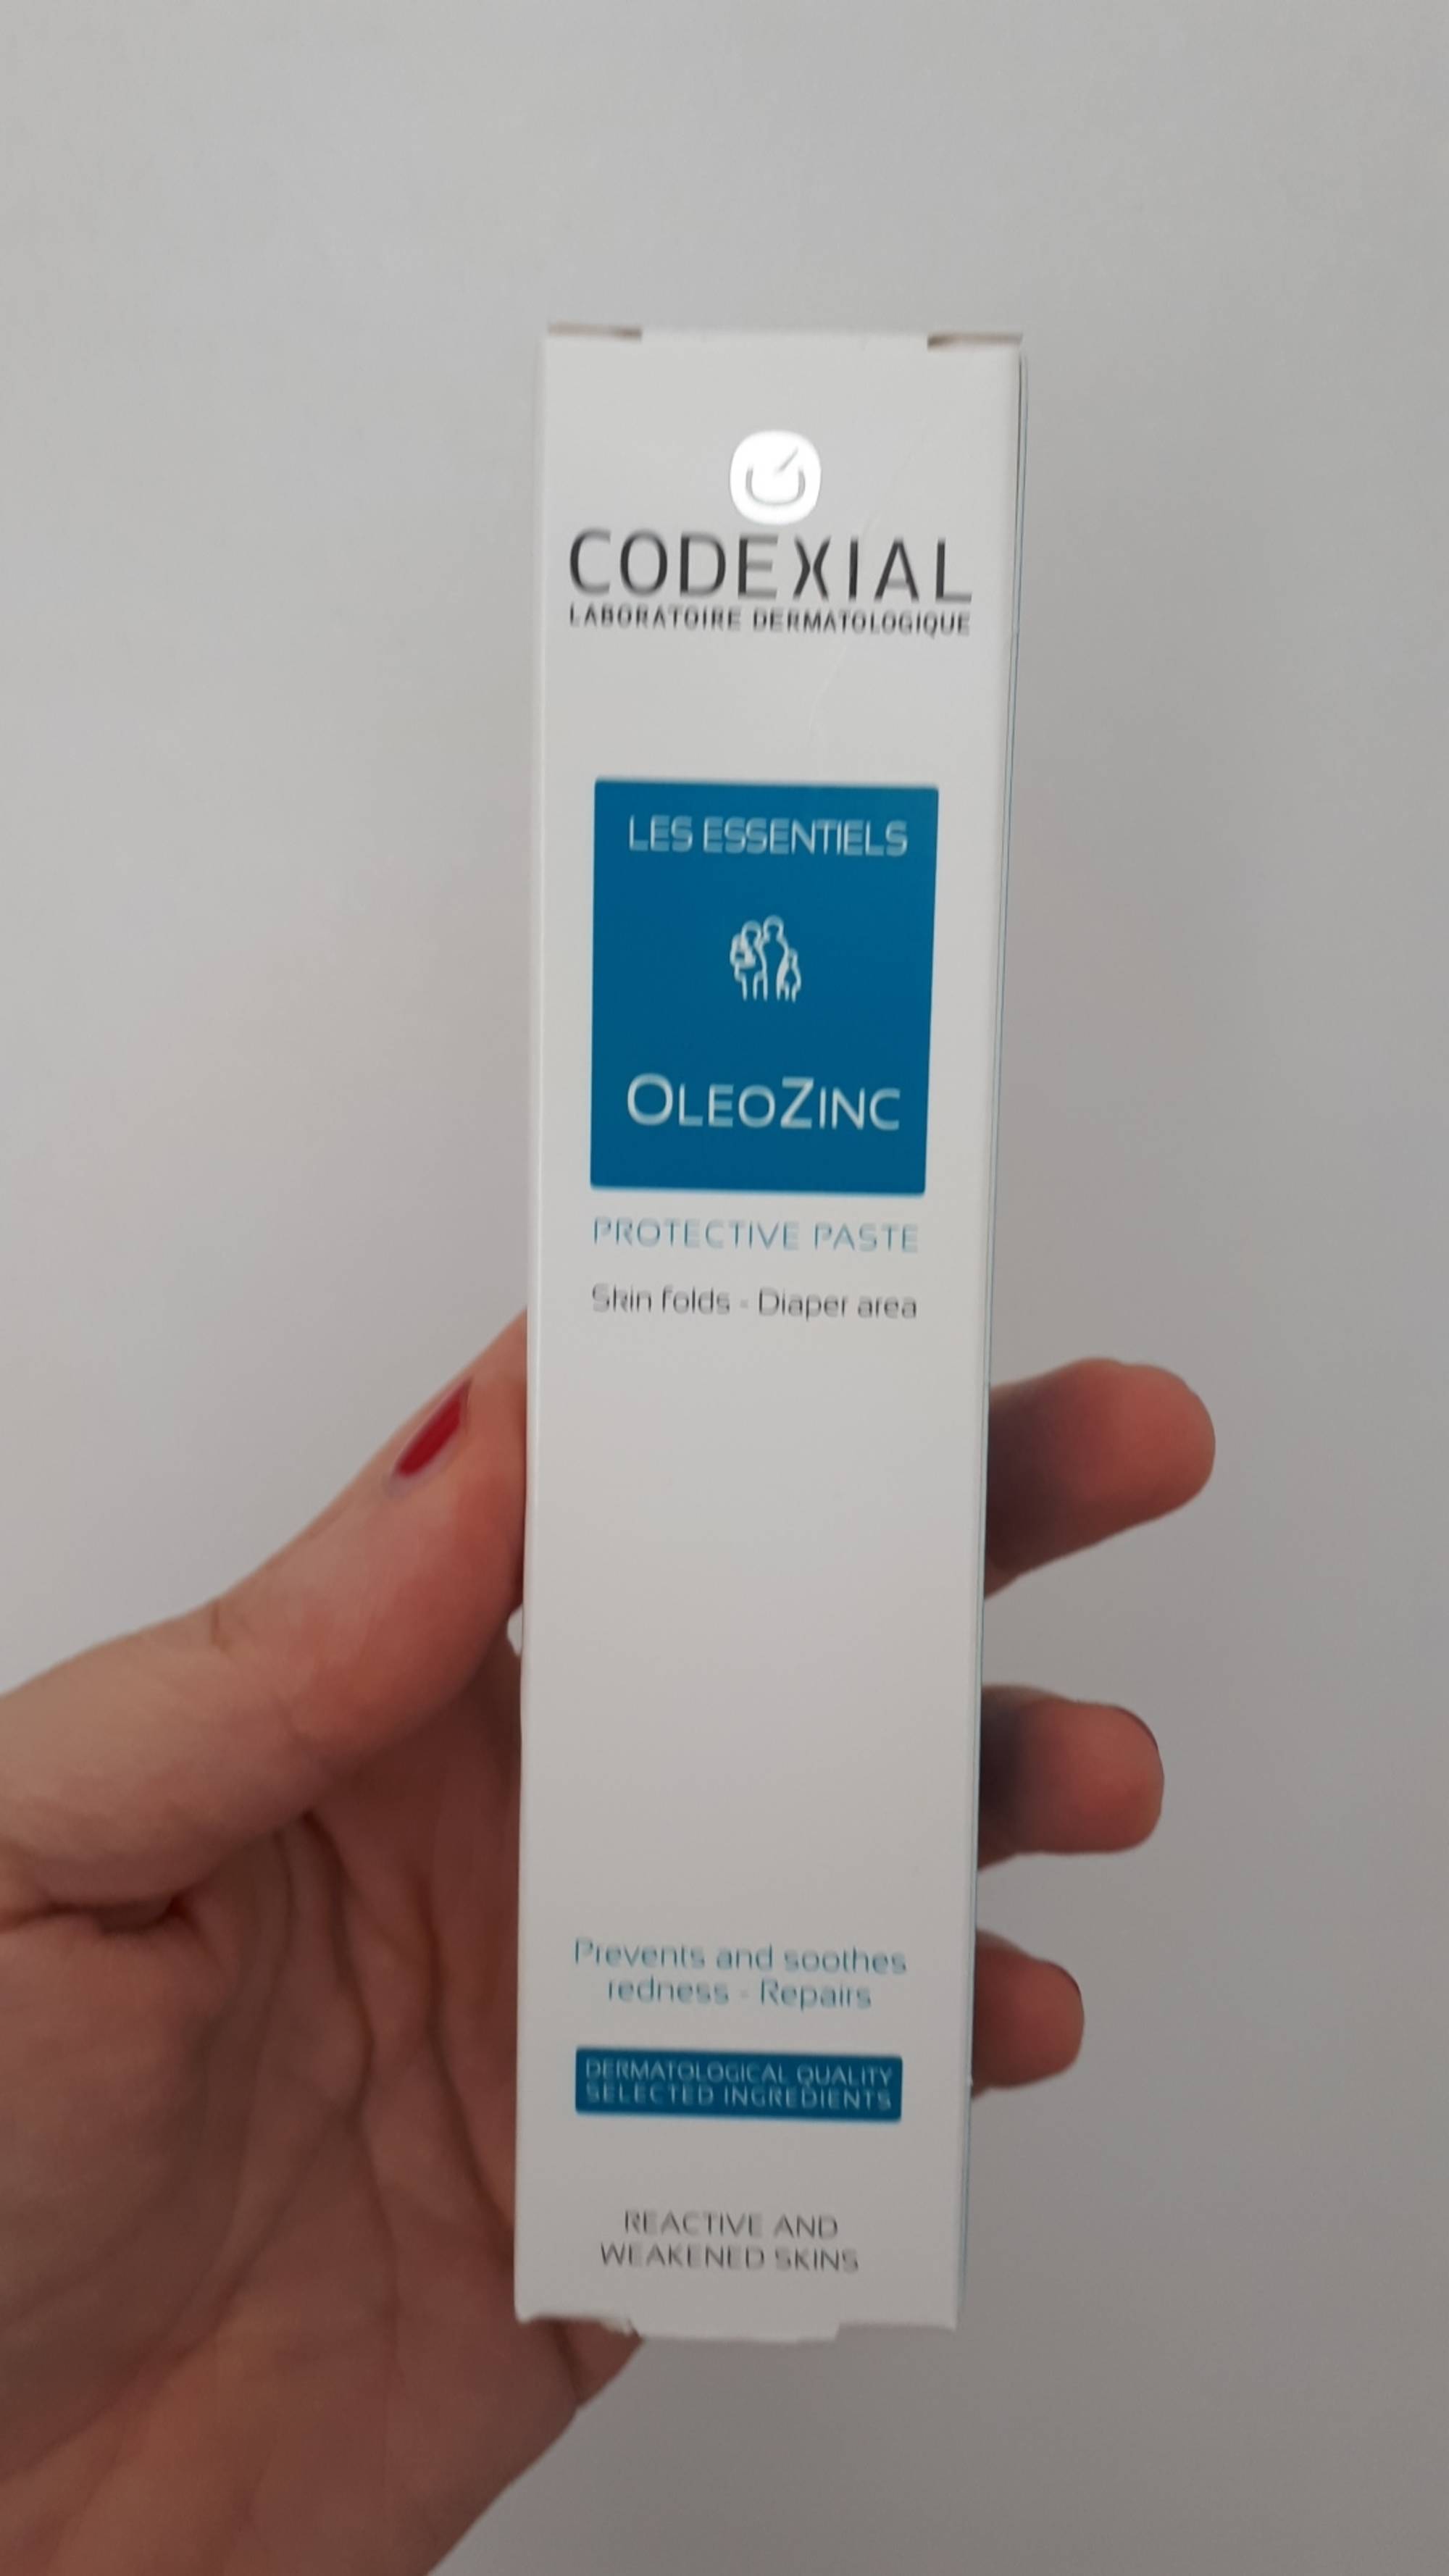 CODEXIAL - Les essentiels Oleo Zinc - Protective paste